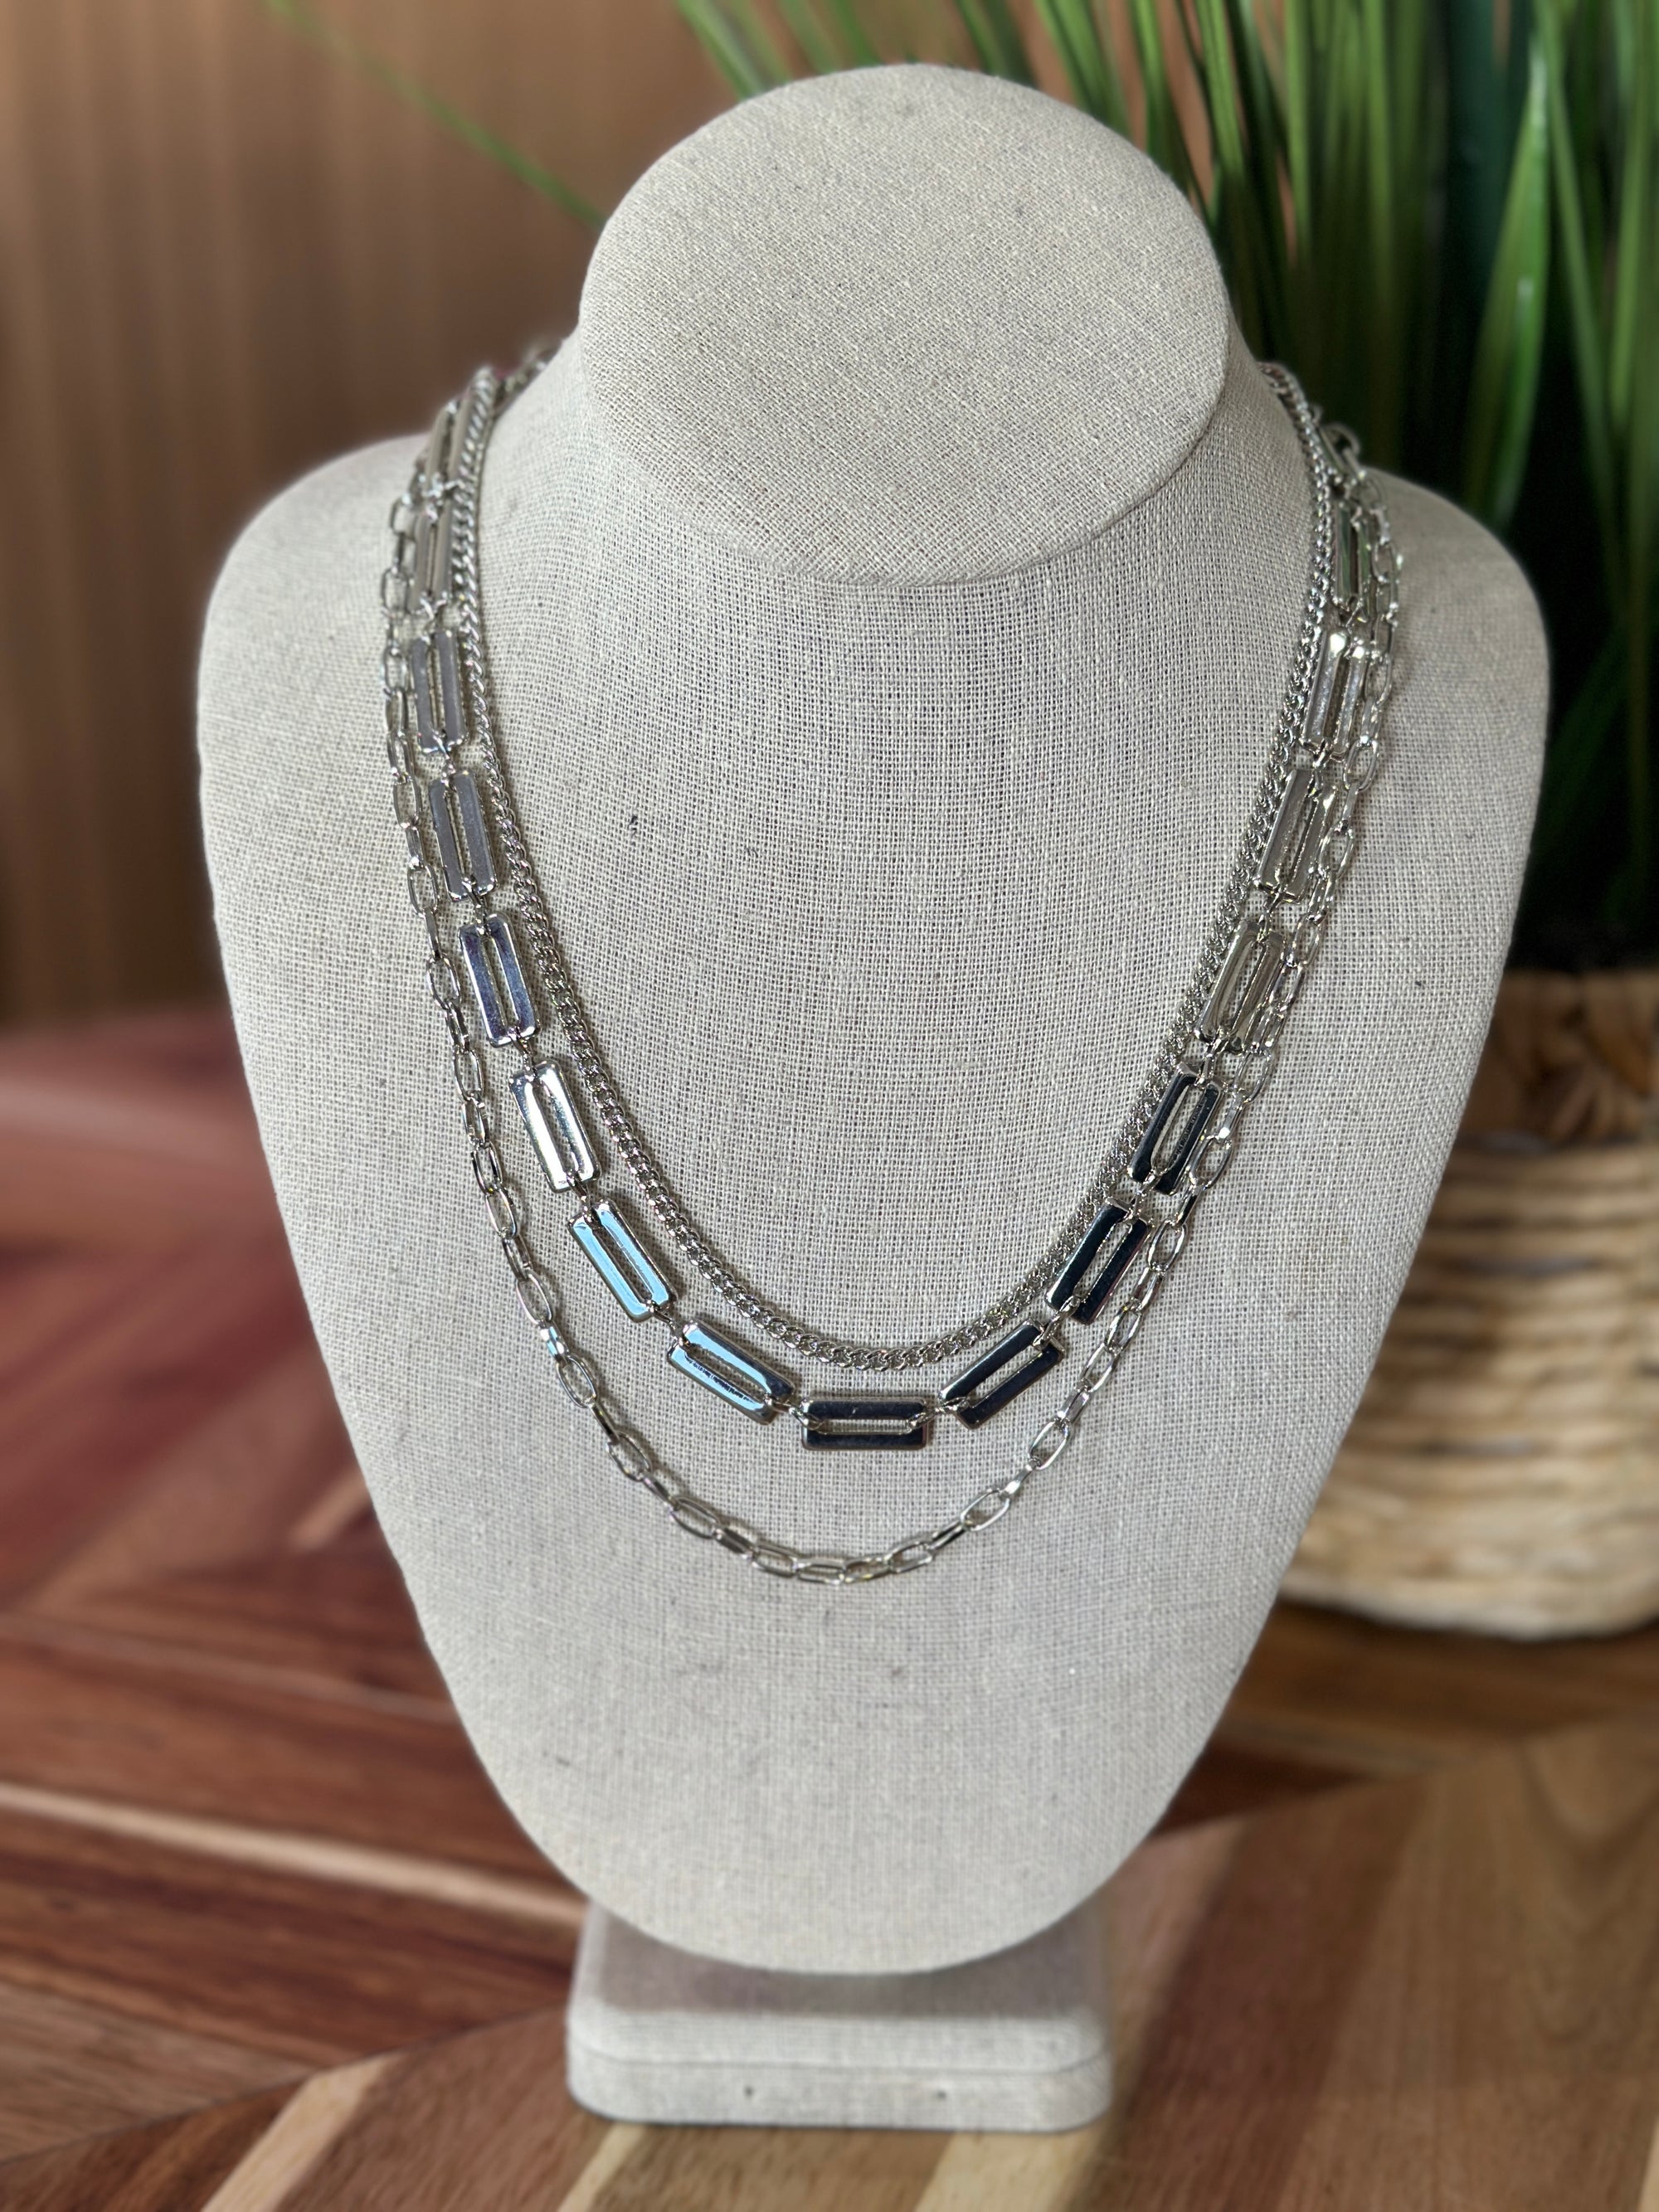 3 Strand Individual Piece Necklace - Silver